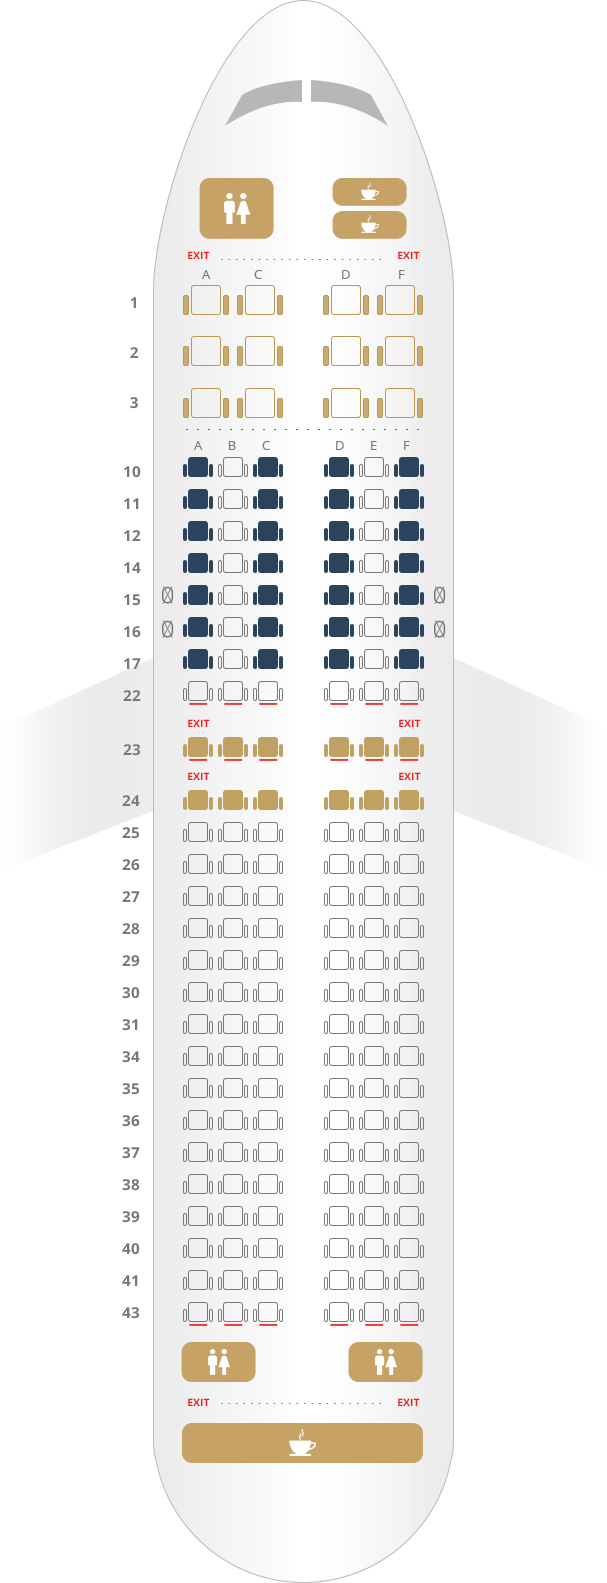 Vistara Flight Seat Map